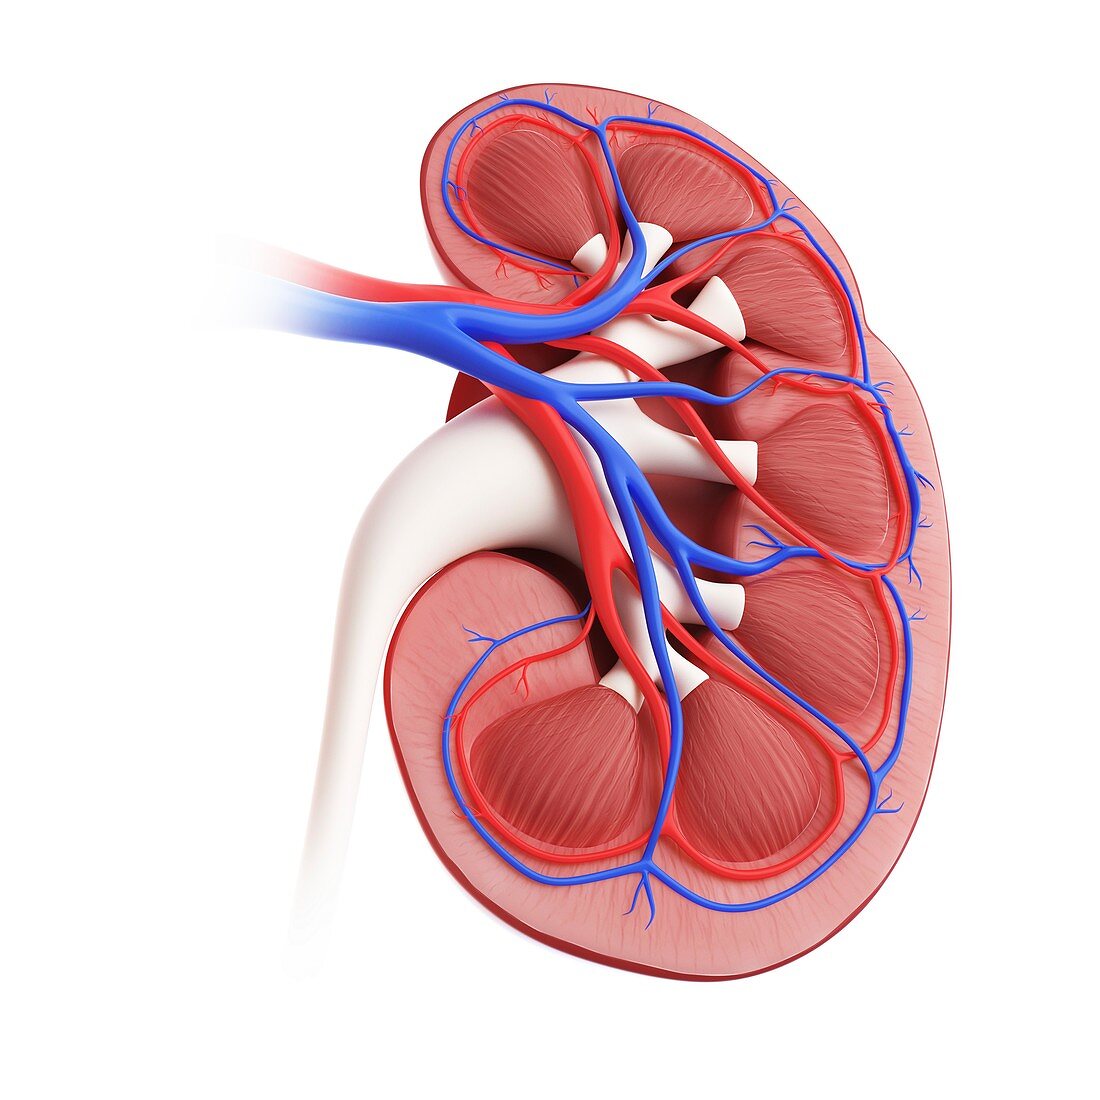 Illustration of a kidney